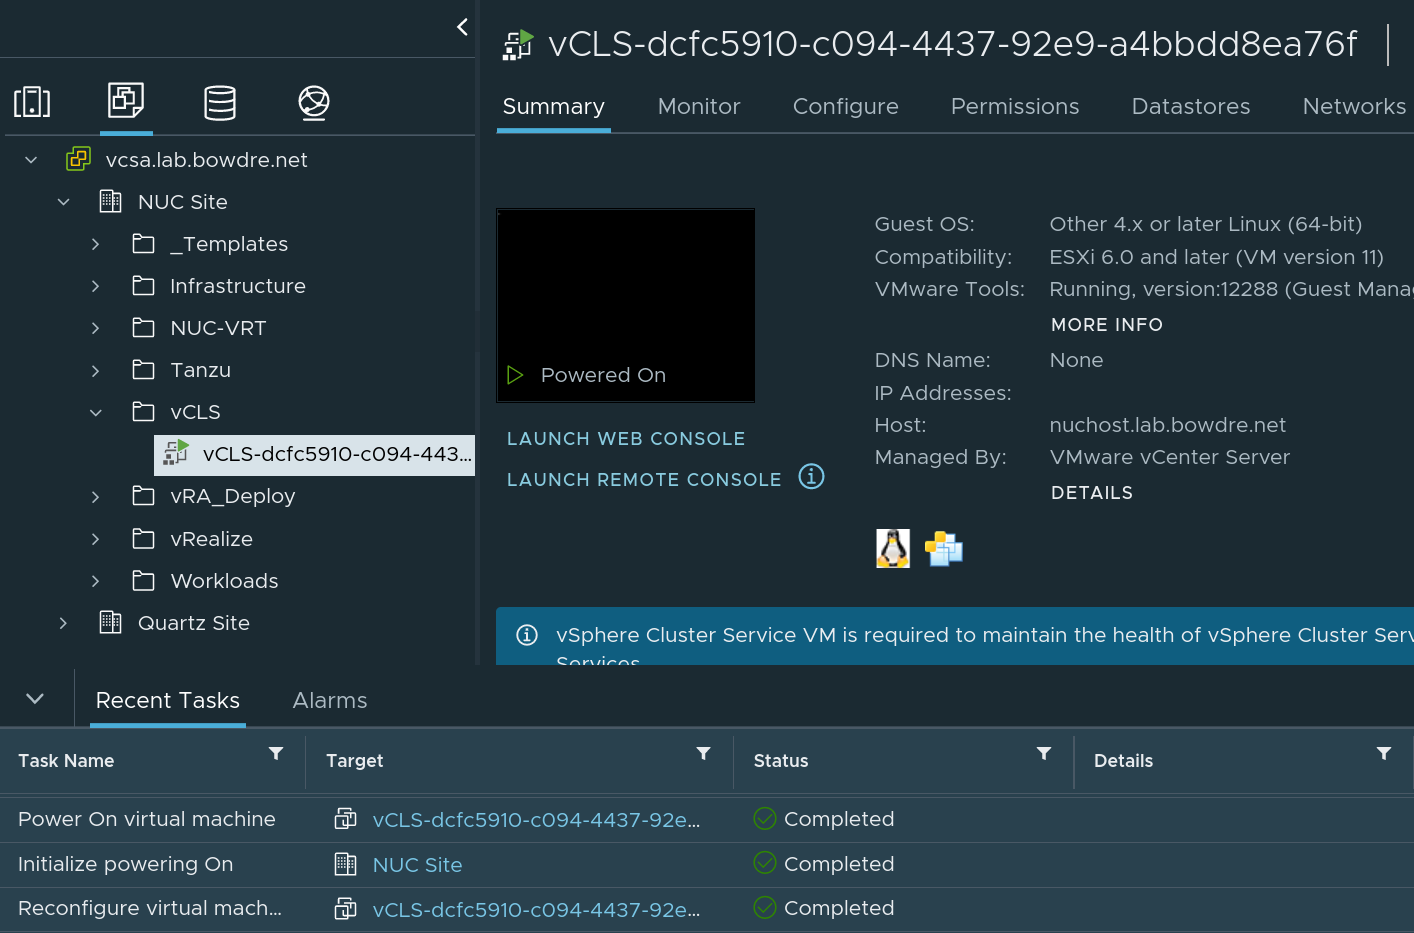 Recreated vCLS VM